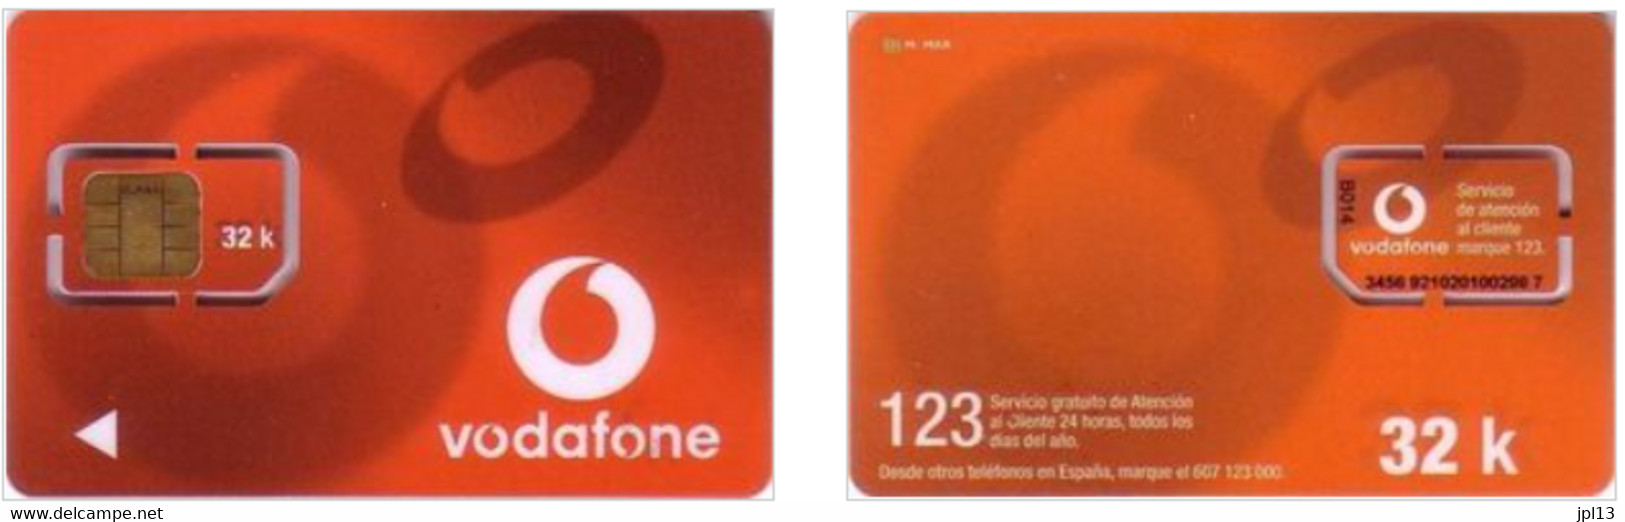 Carte SIM - Espagne - Vodafone - Vodafone Red Card 32K, Série B018 8710 - Vodafone